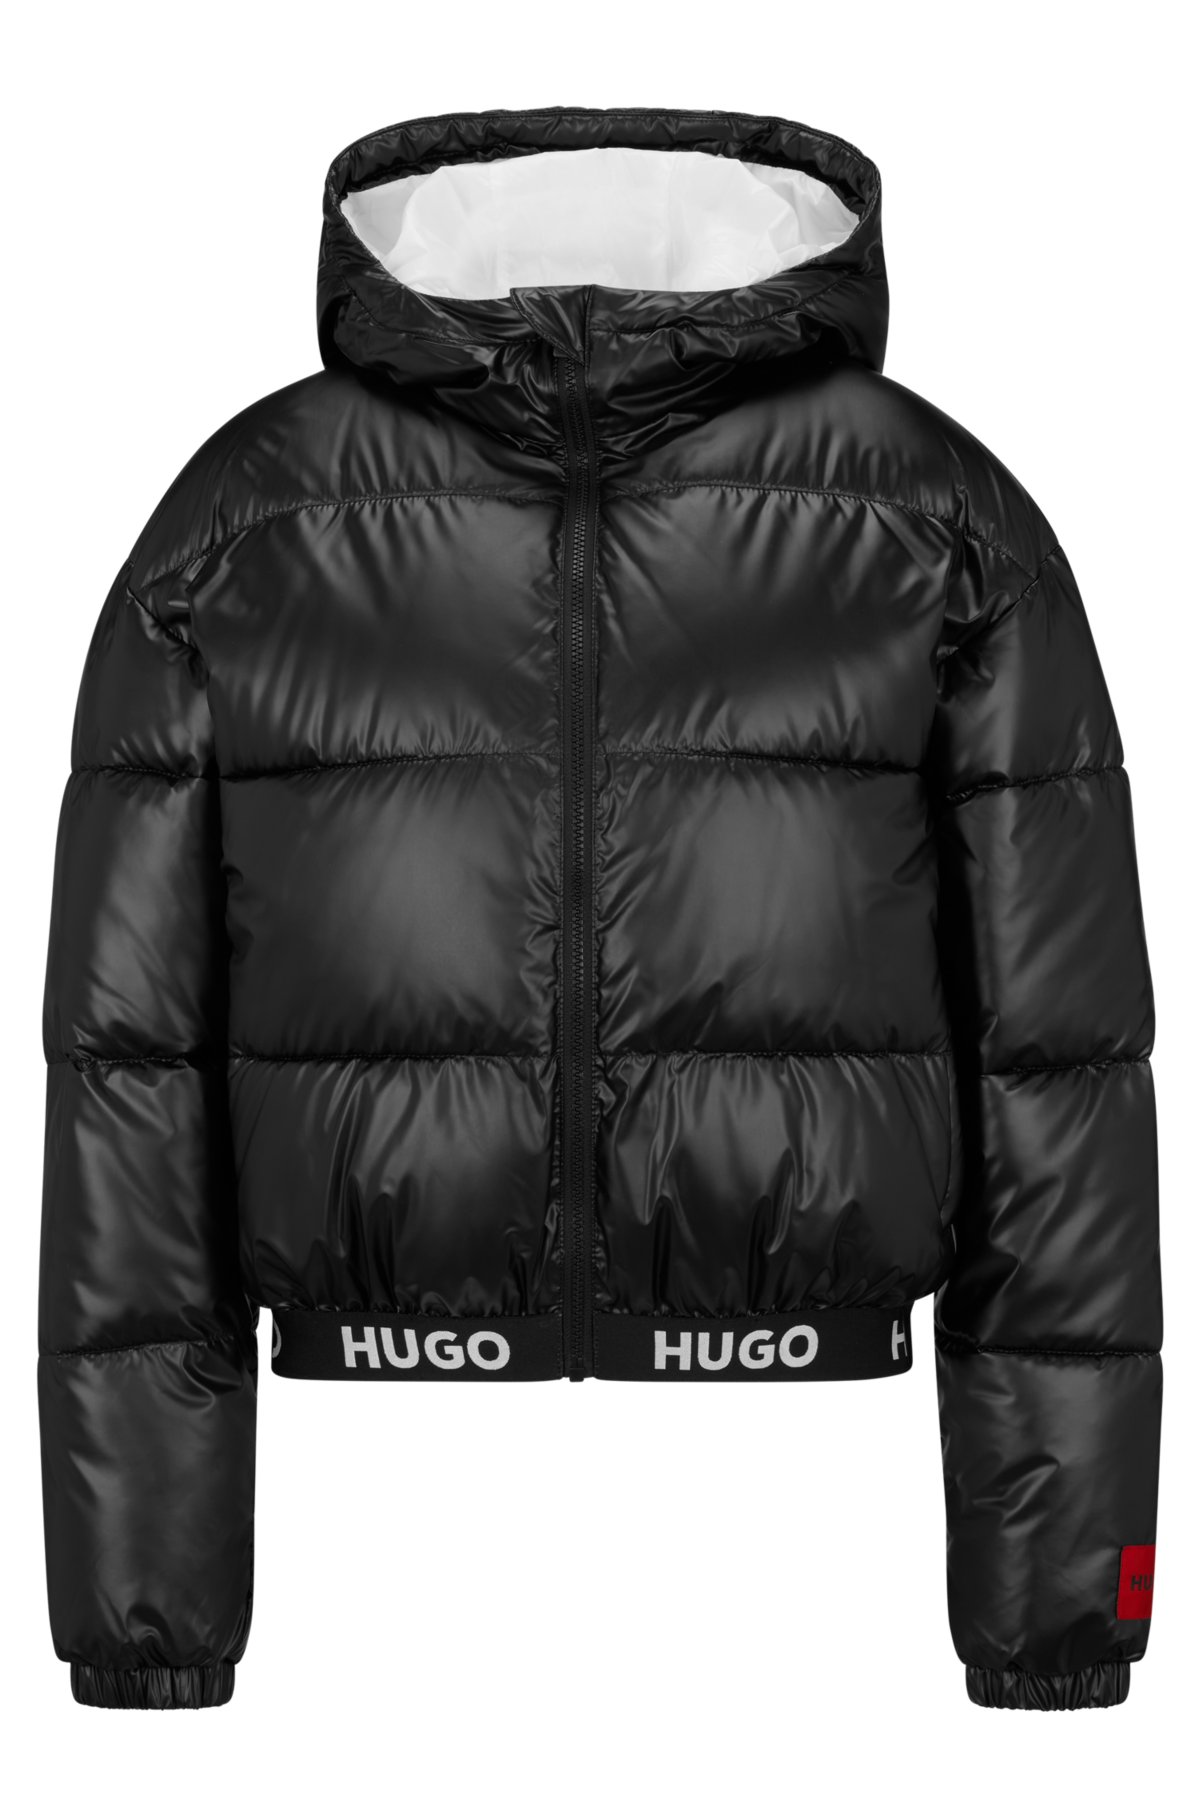 HUGO - Hooded regular-fit logo waistband with jacket